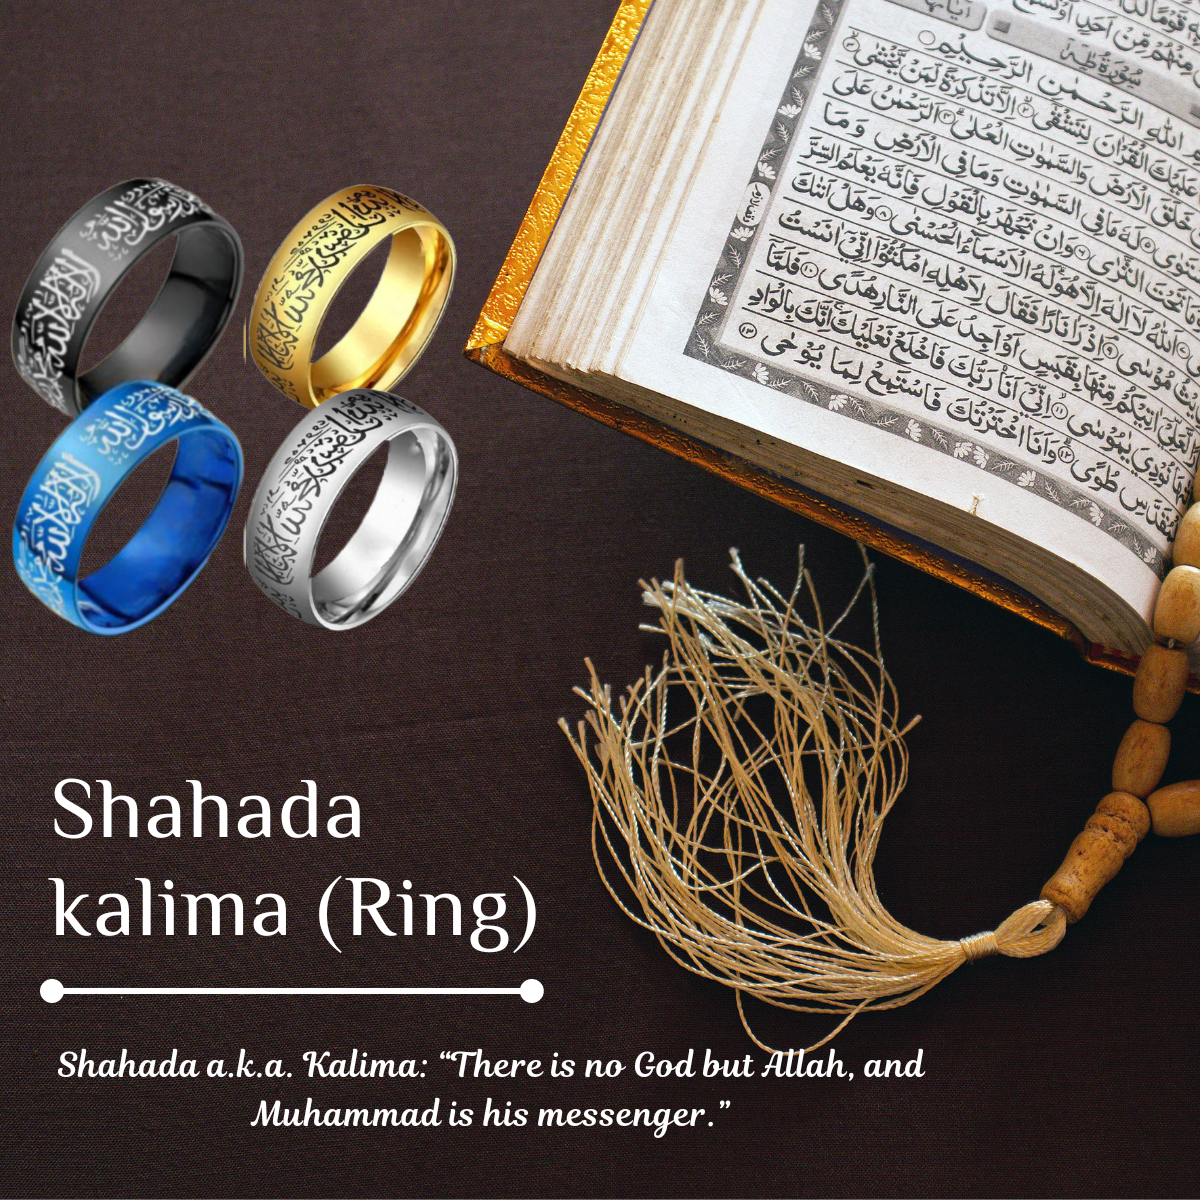 SHAHADA (KALIMA) RING